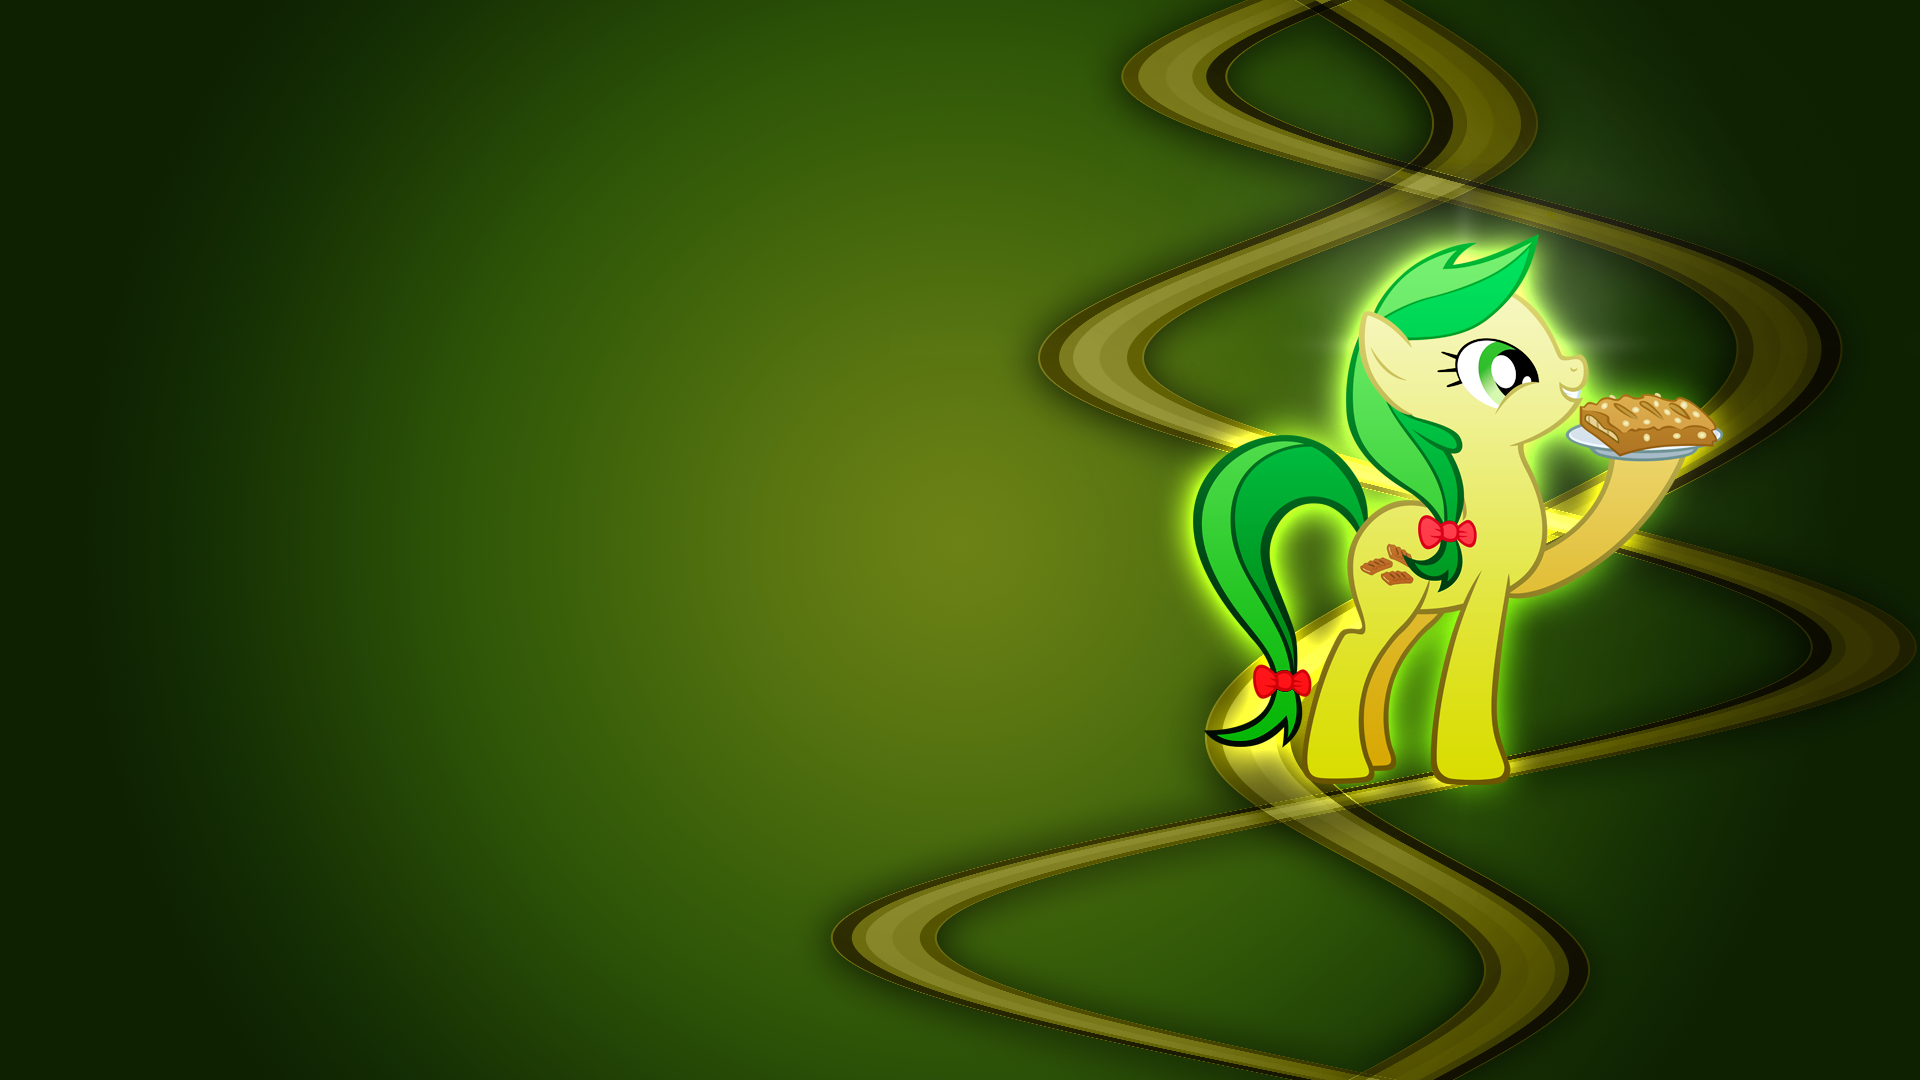 BG Ponies - Apple Fritter by Episkopi and solusjbj